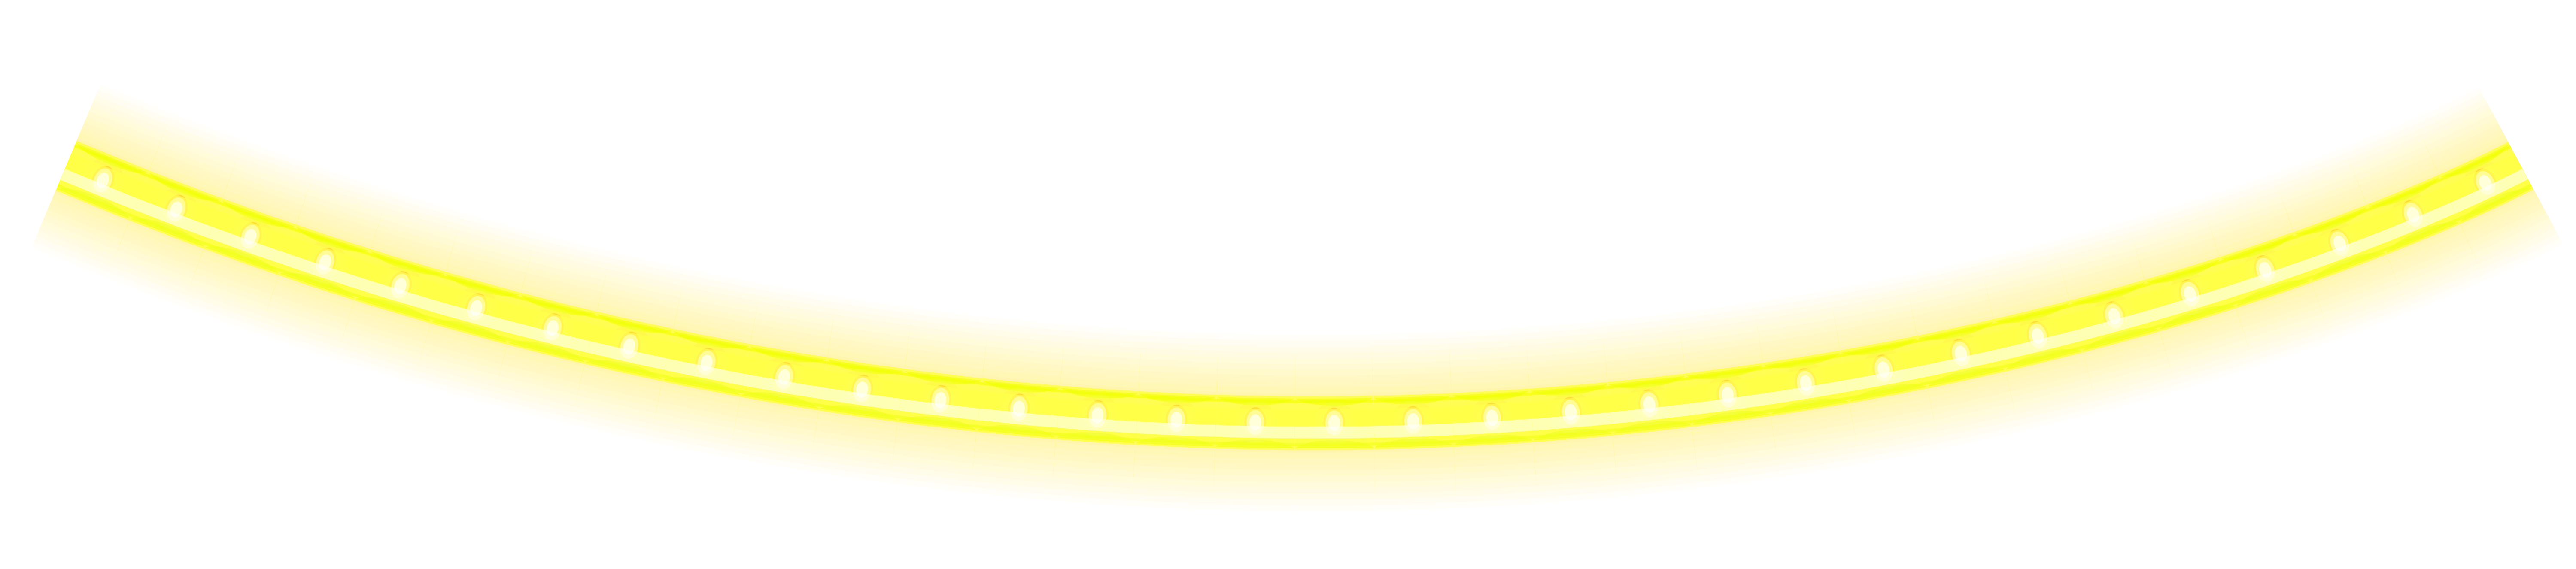 Flashlight clipart glow, Flashlight glow Transparent FREE